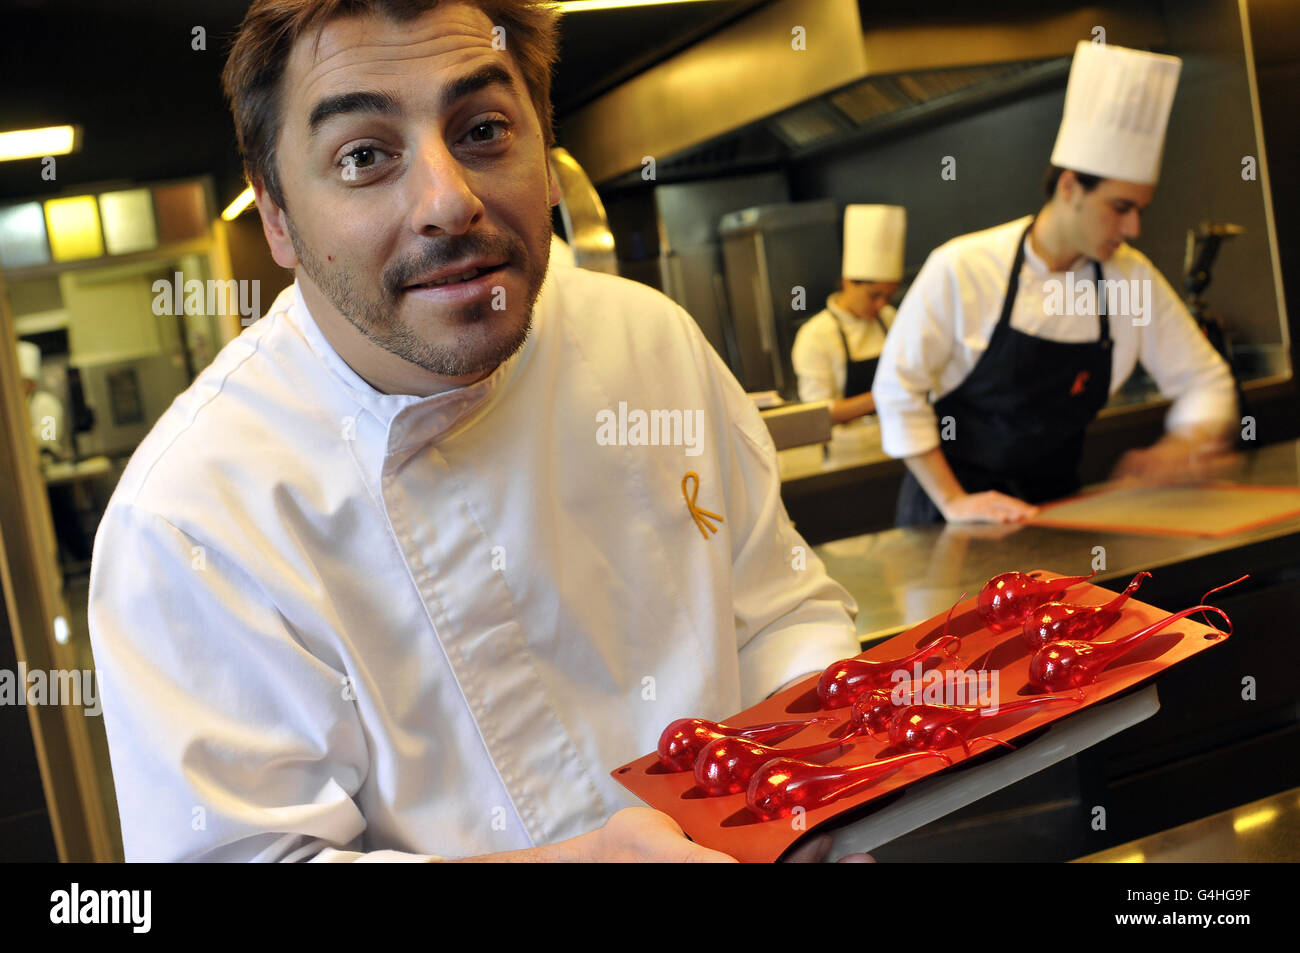 Jordi Roca , Chef at El Celler de Can Roca restaurant in Girona, Catalonia, Spain. Stock Photo